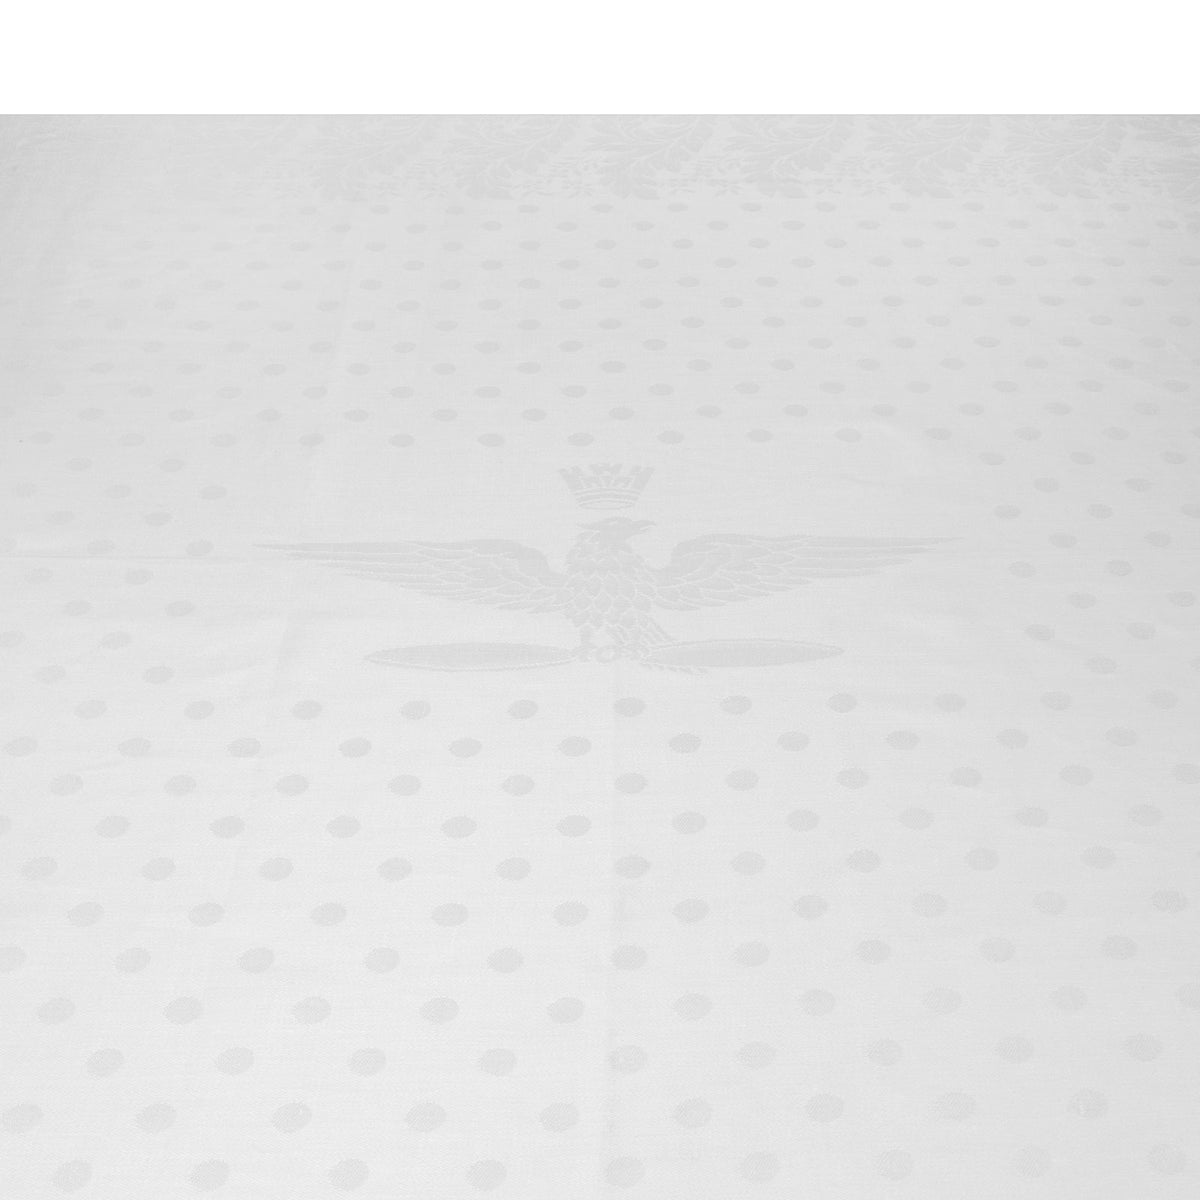 White Linen Tablecloth | Italian Air Force